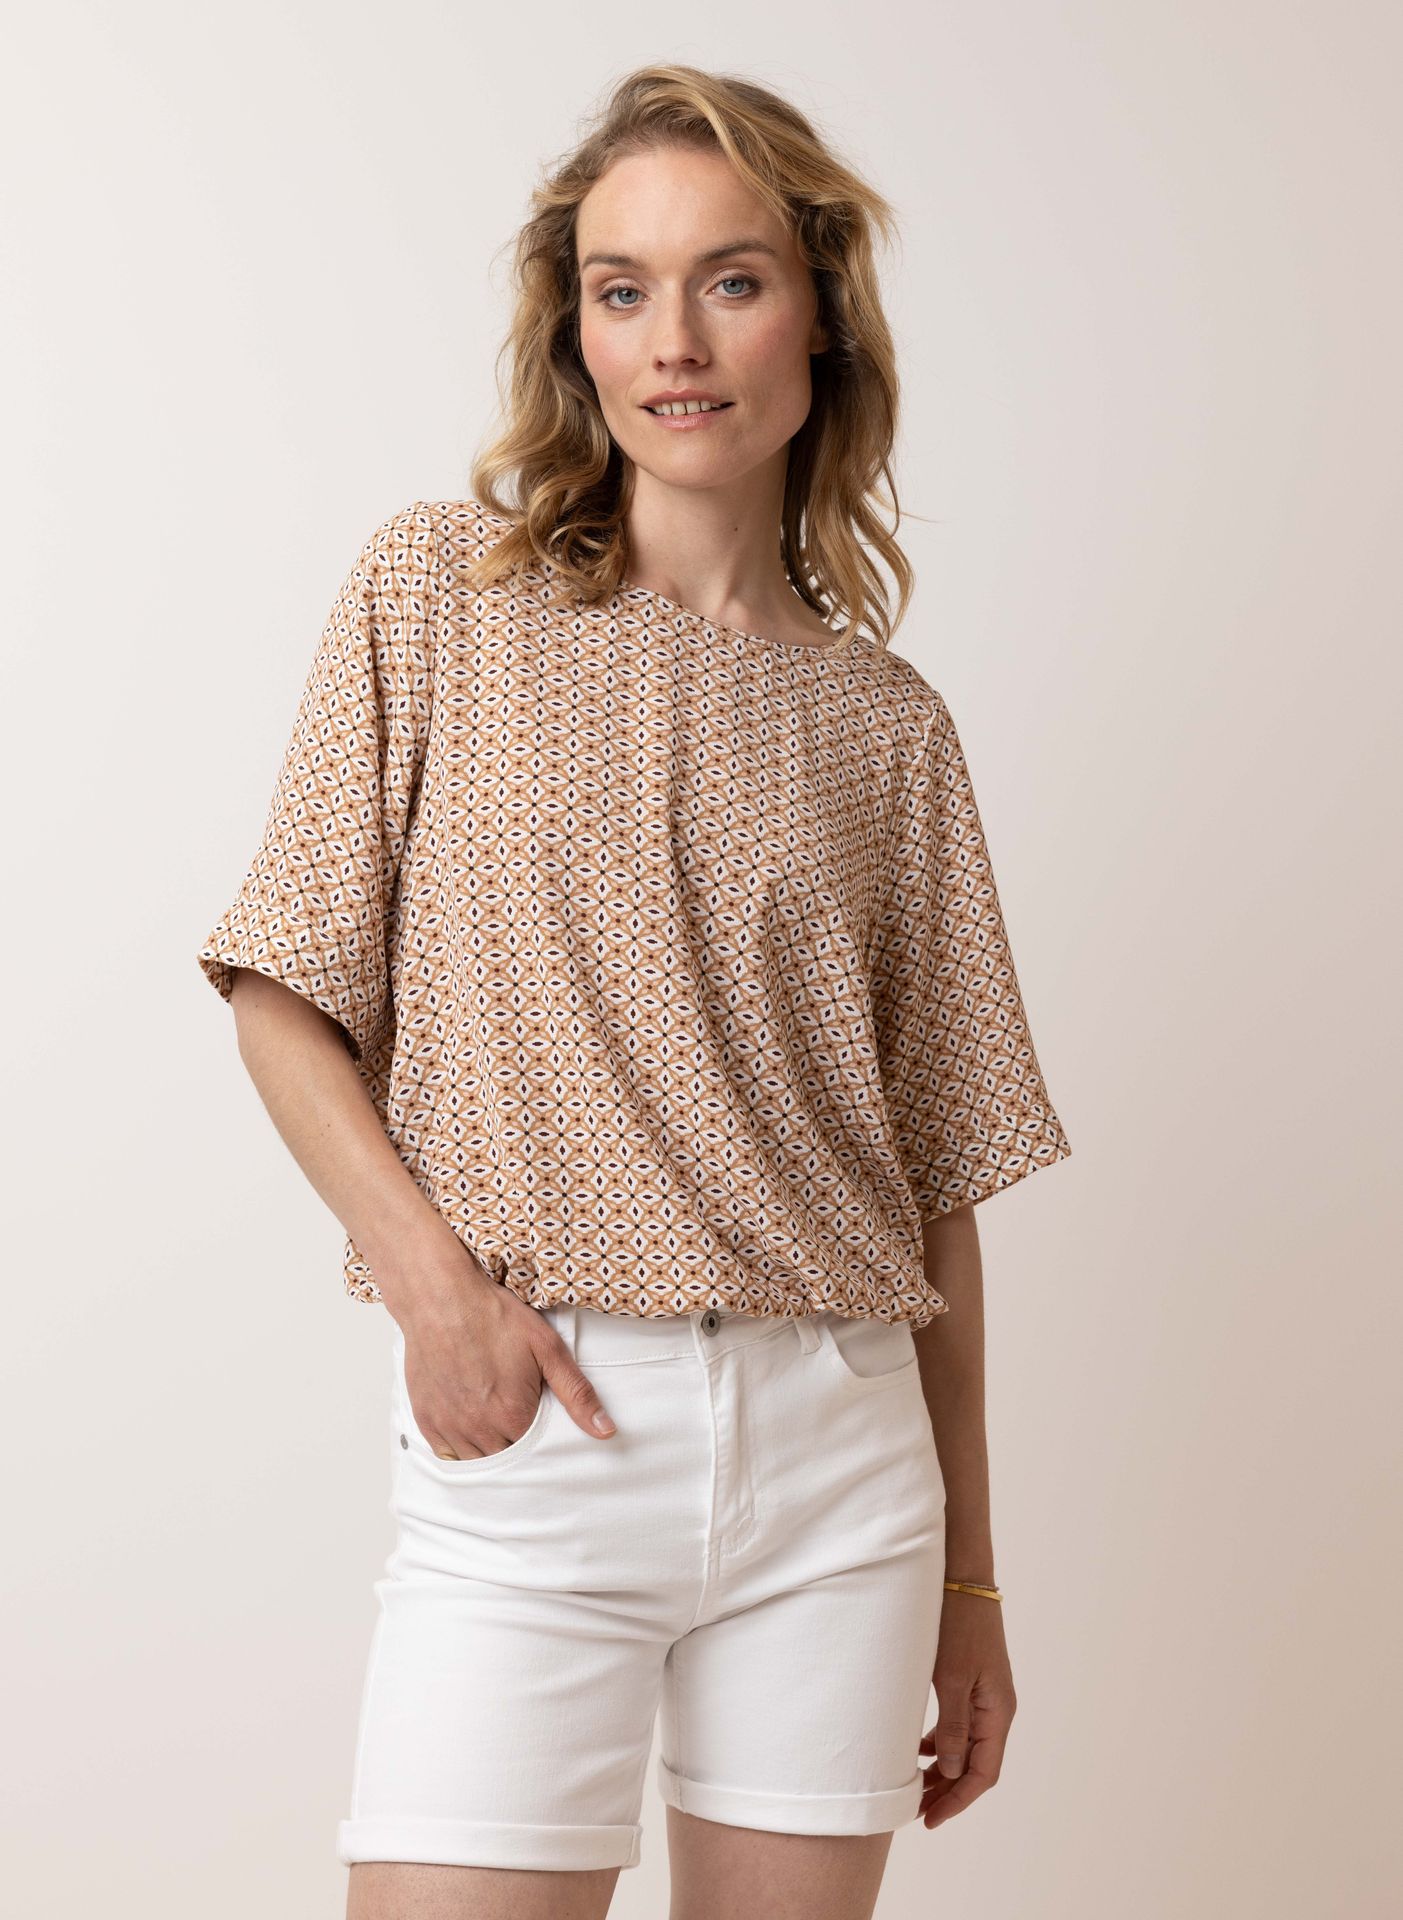 Norah Lichtbruine blouse light brown multicolor 213928-210